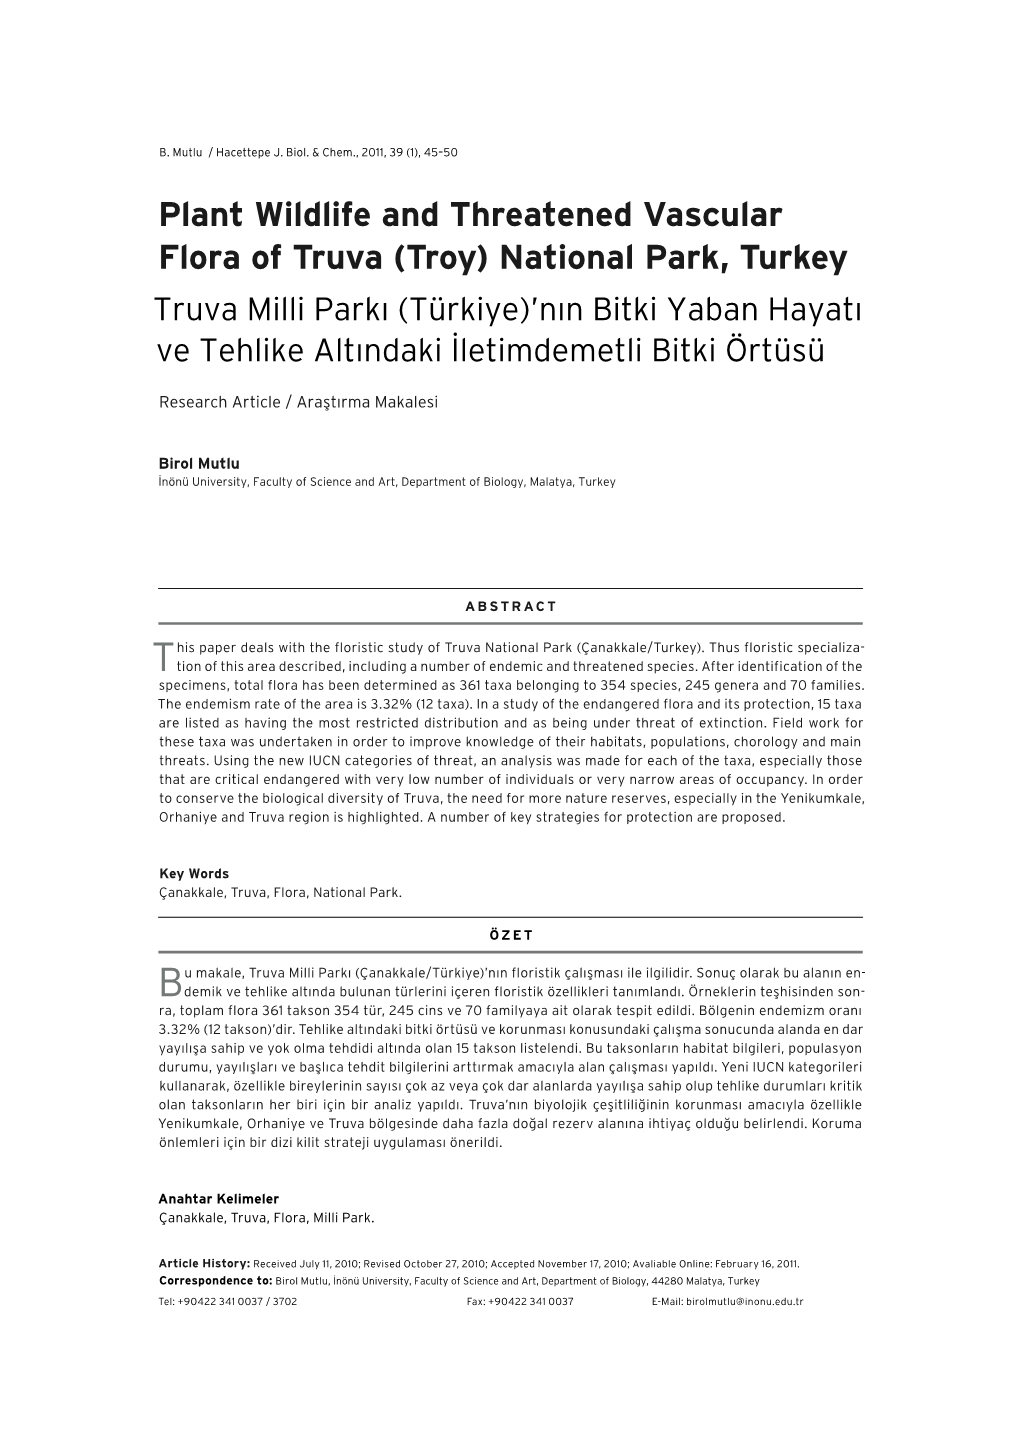 Plant Wildlife and Threatened Vascular Flora of Truva (Troy)